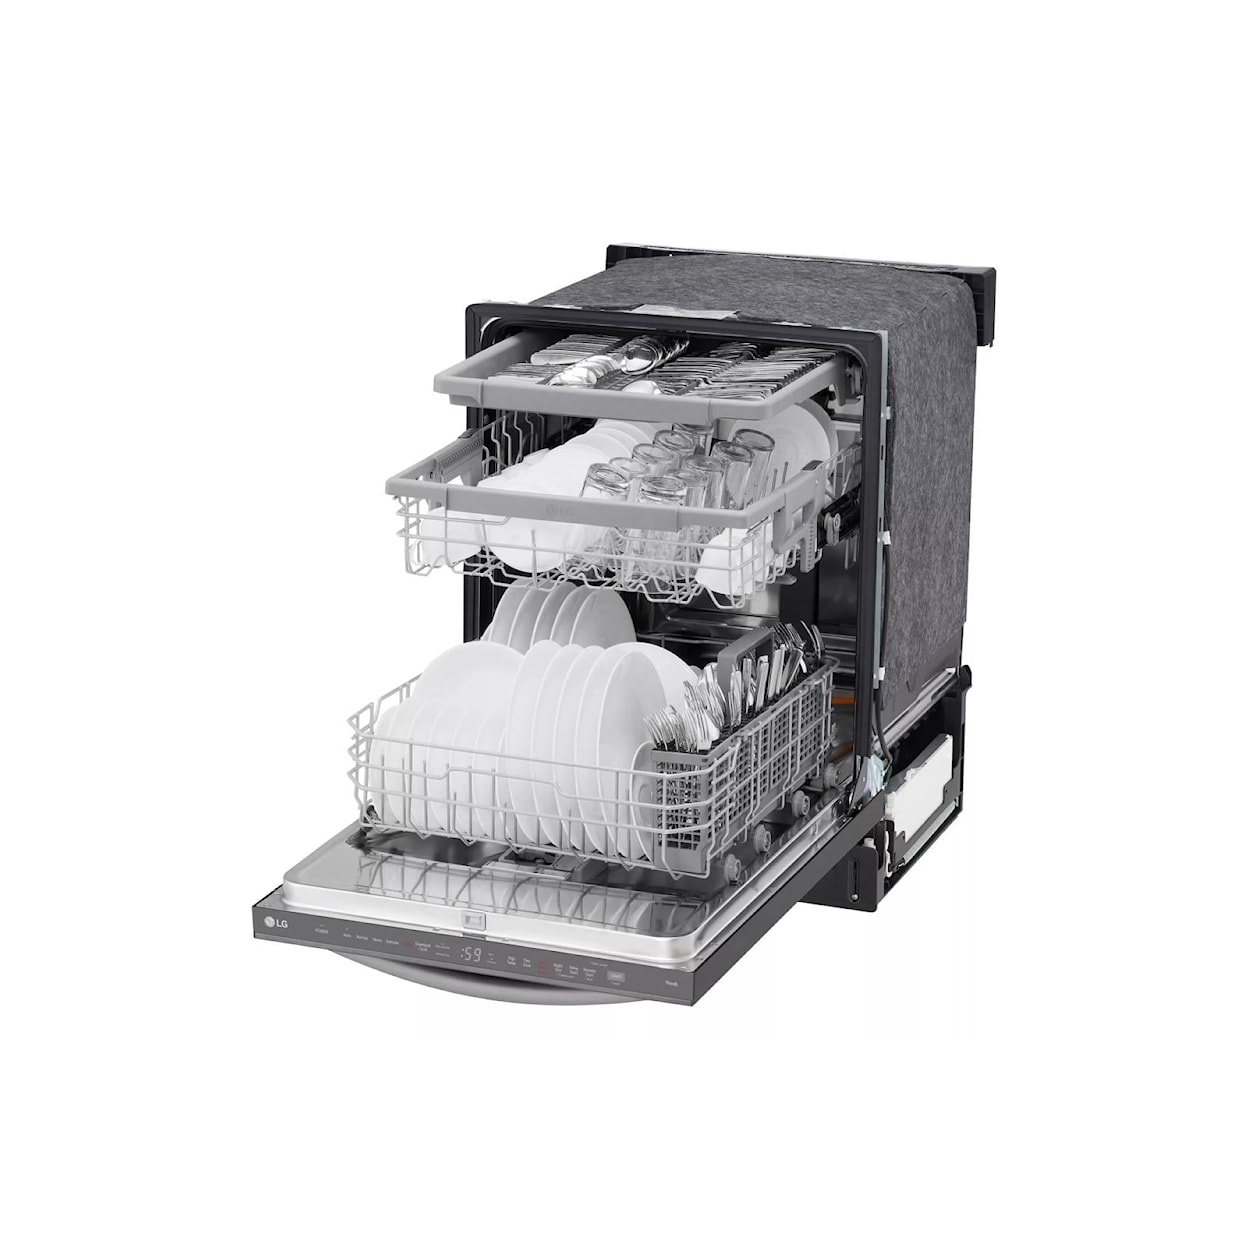 LG Appliances Dishwashers Built In Dishwasher